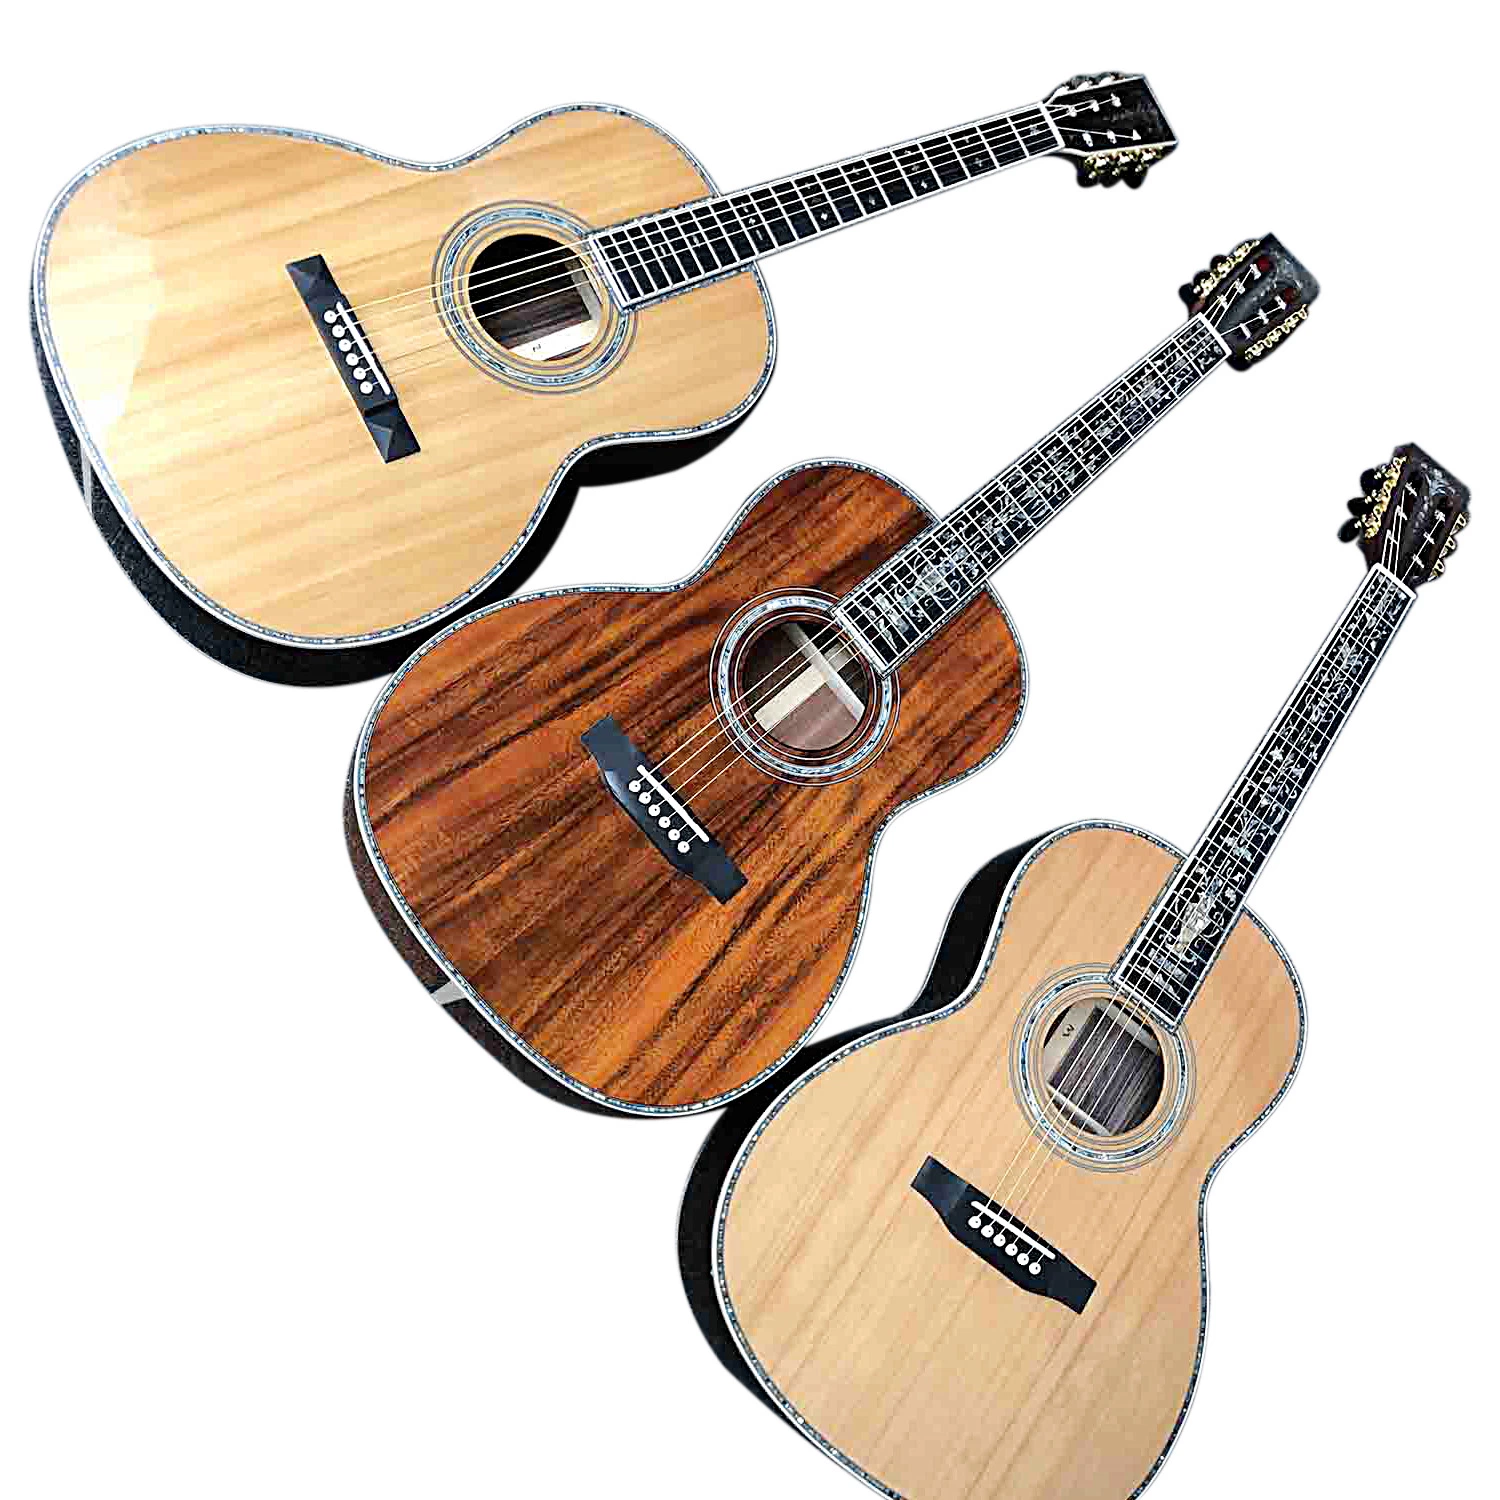 Custom OOO Spruce Koa Haut Guitare acoustique 39 pouces accepter Om, D, Guitars Jumbo OEM